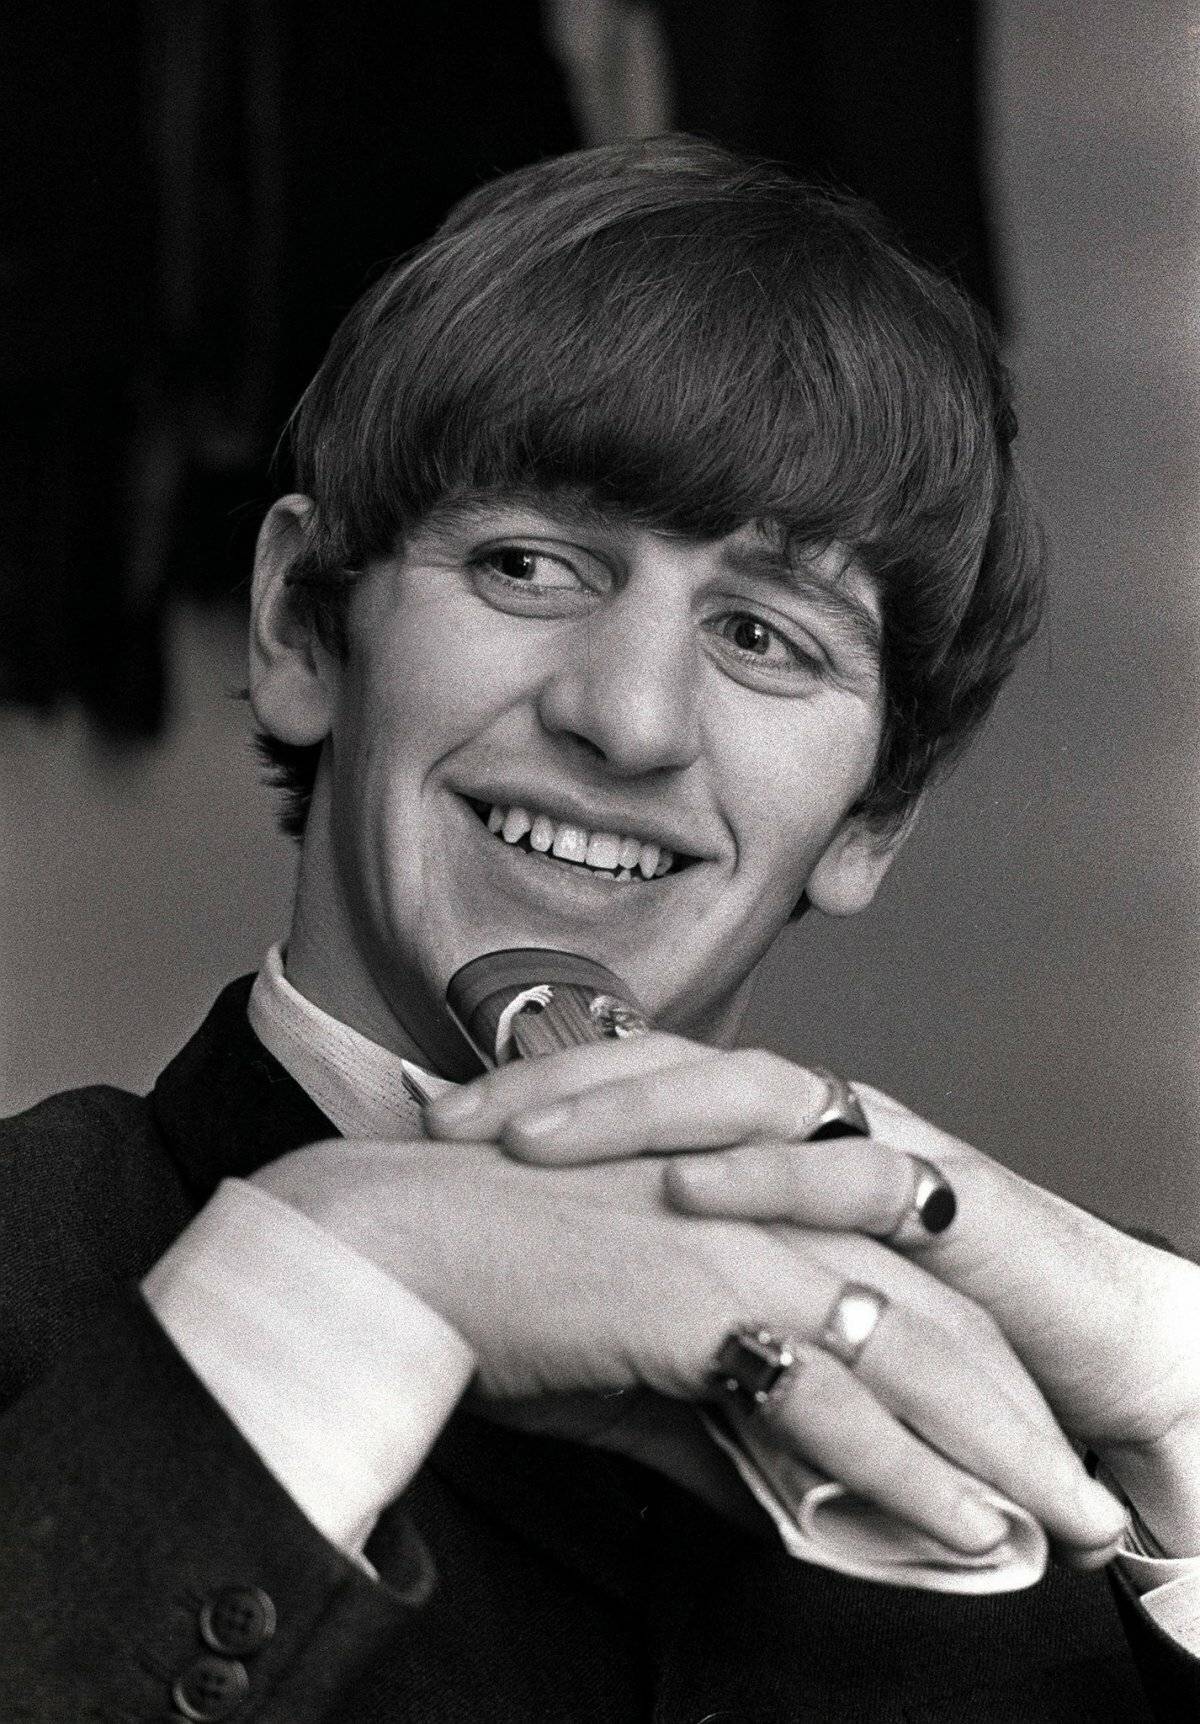 Ringo Starr dans sa jeunesse...